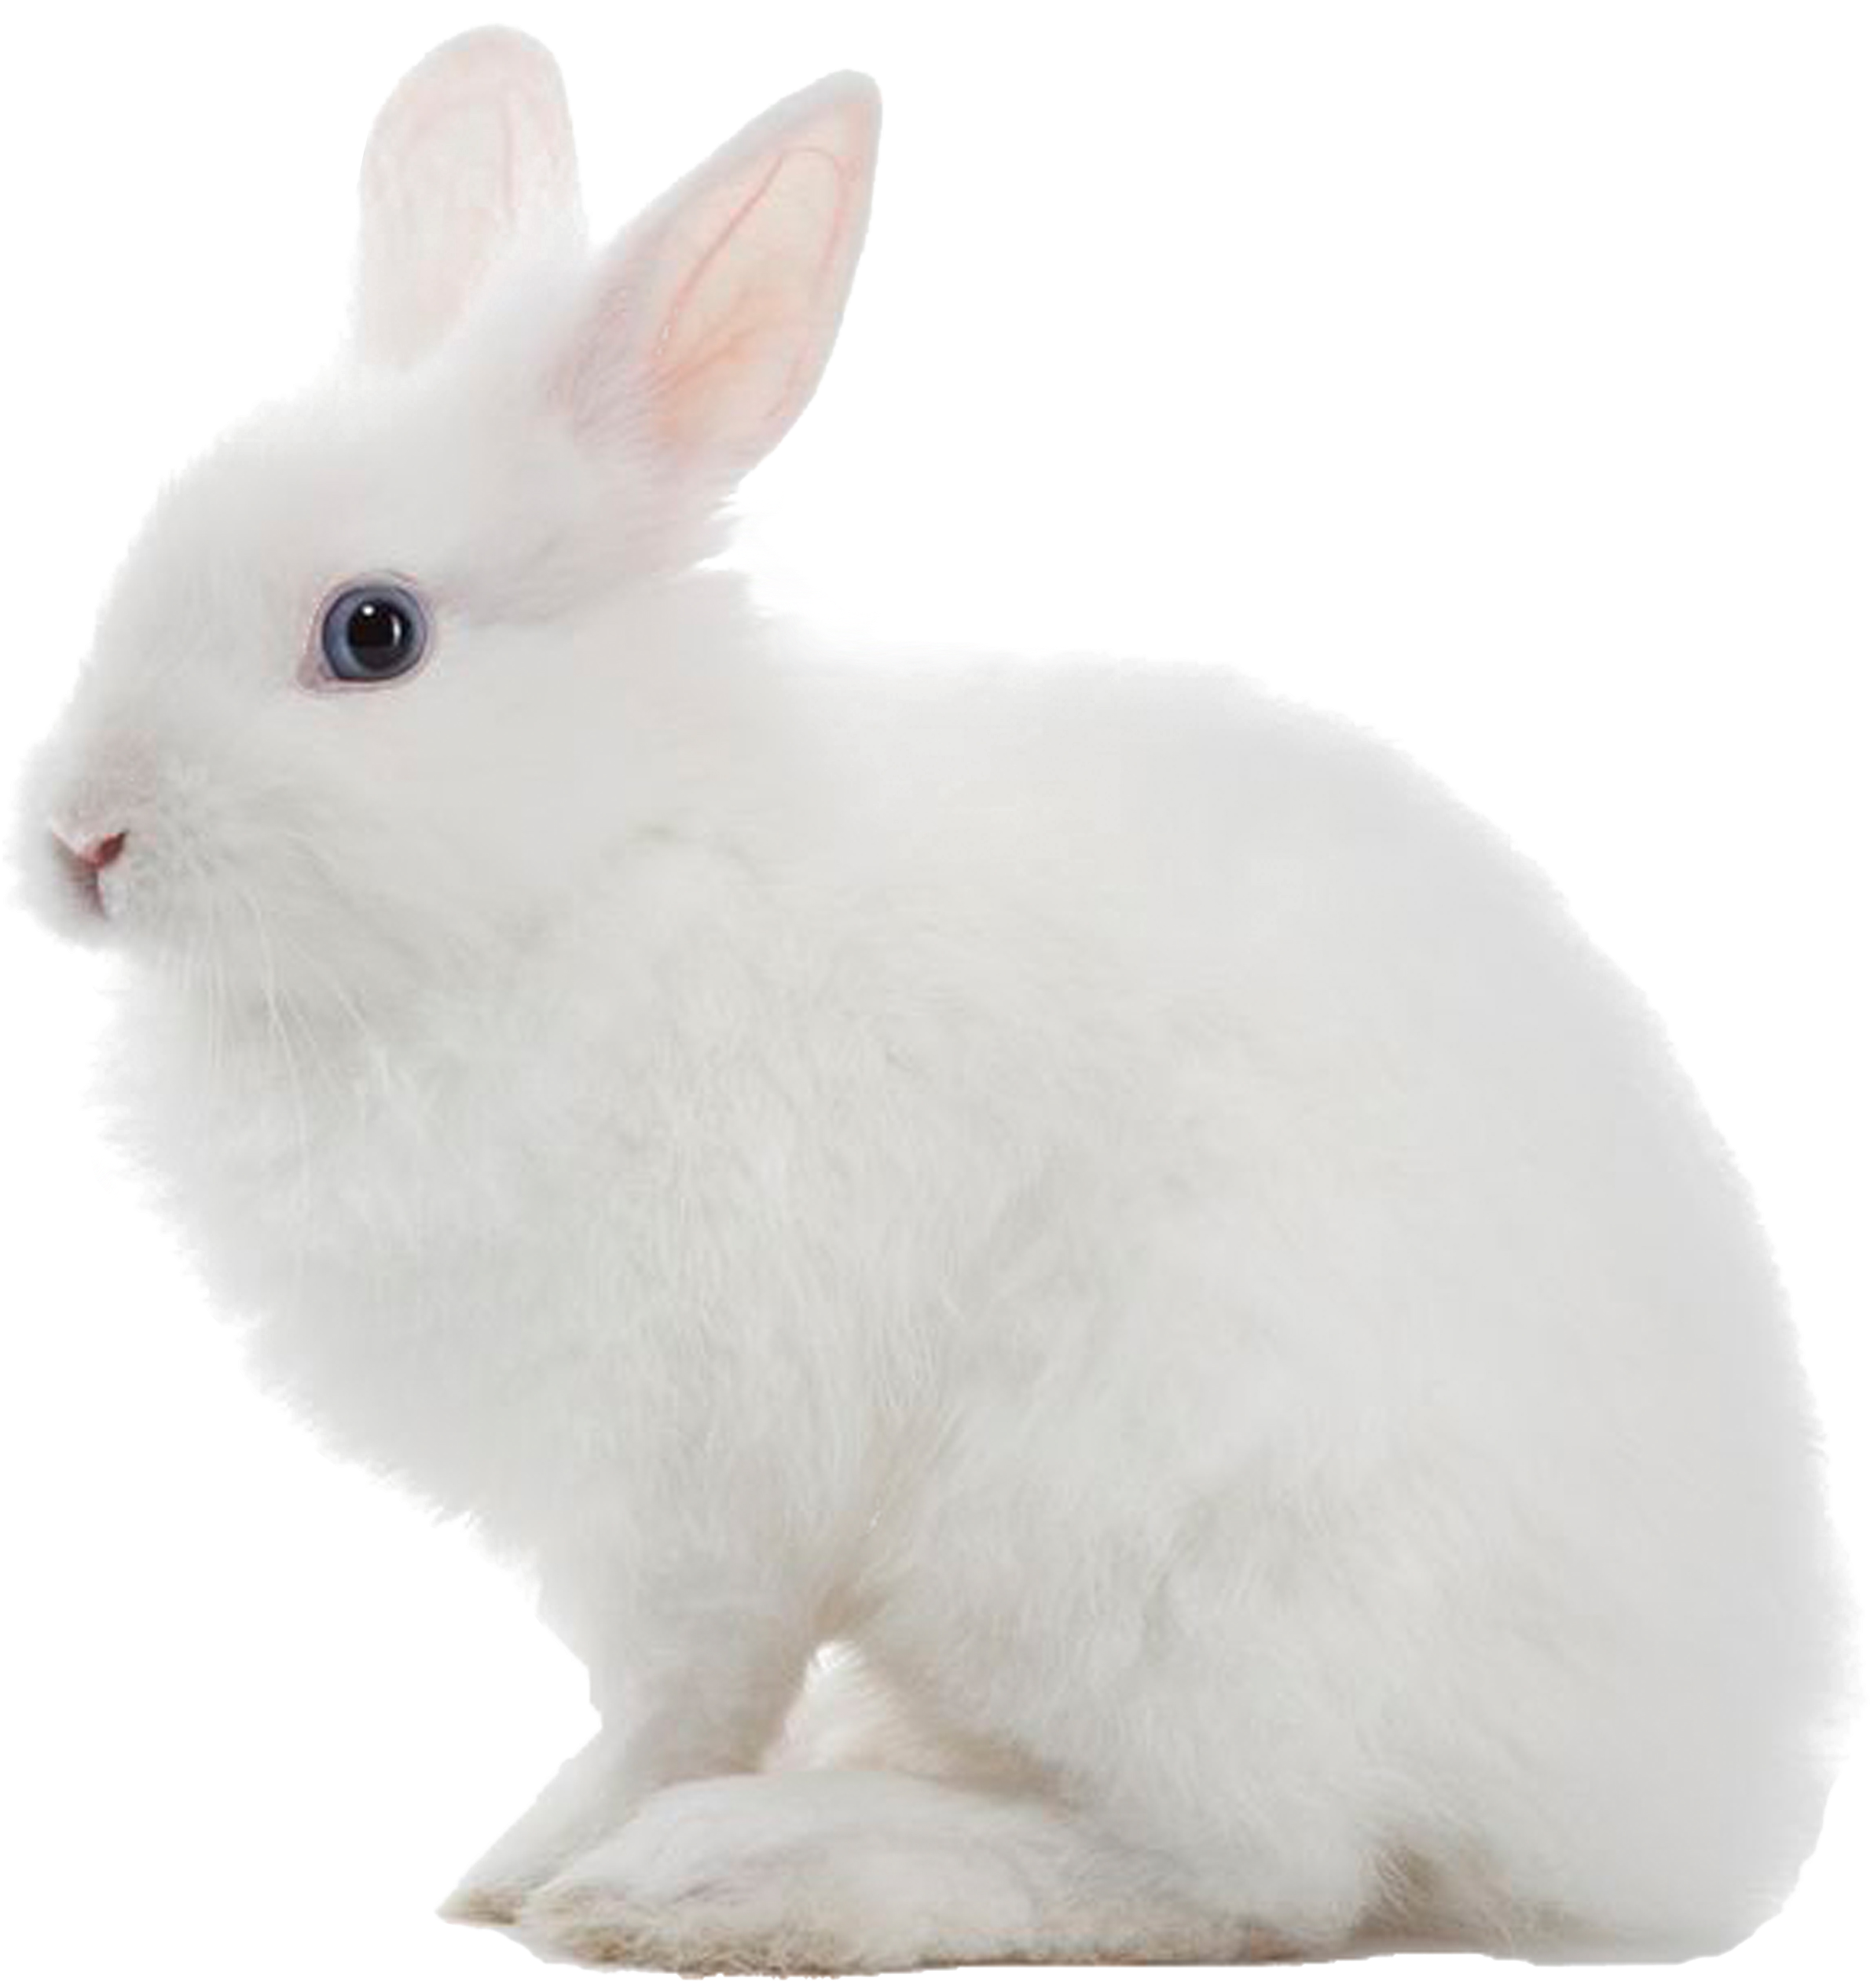 White Rabbit Profile View PNG image